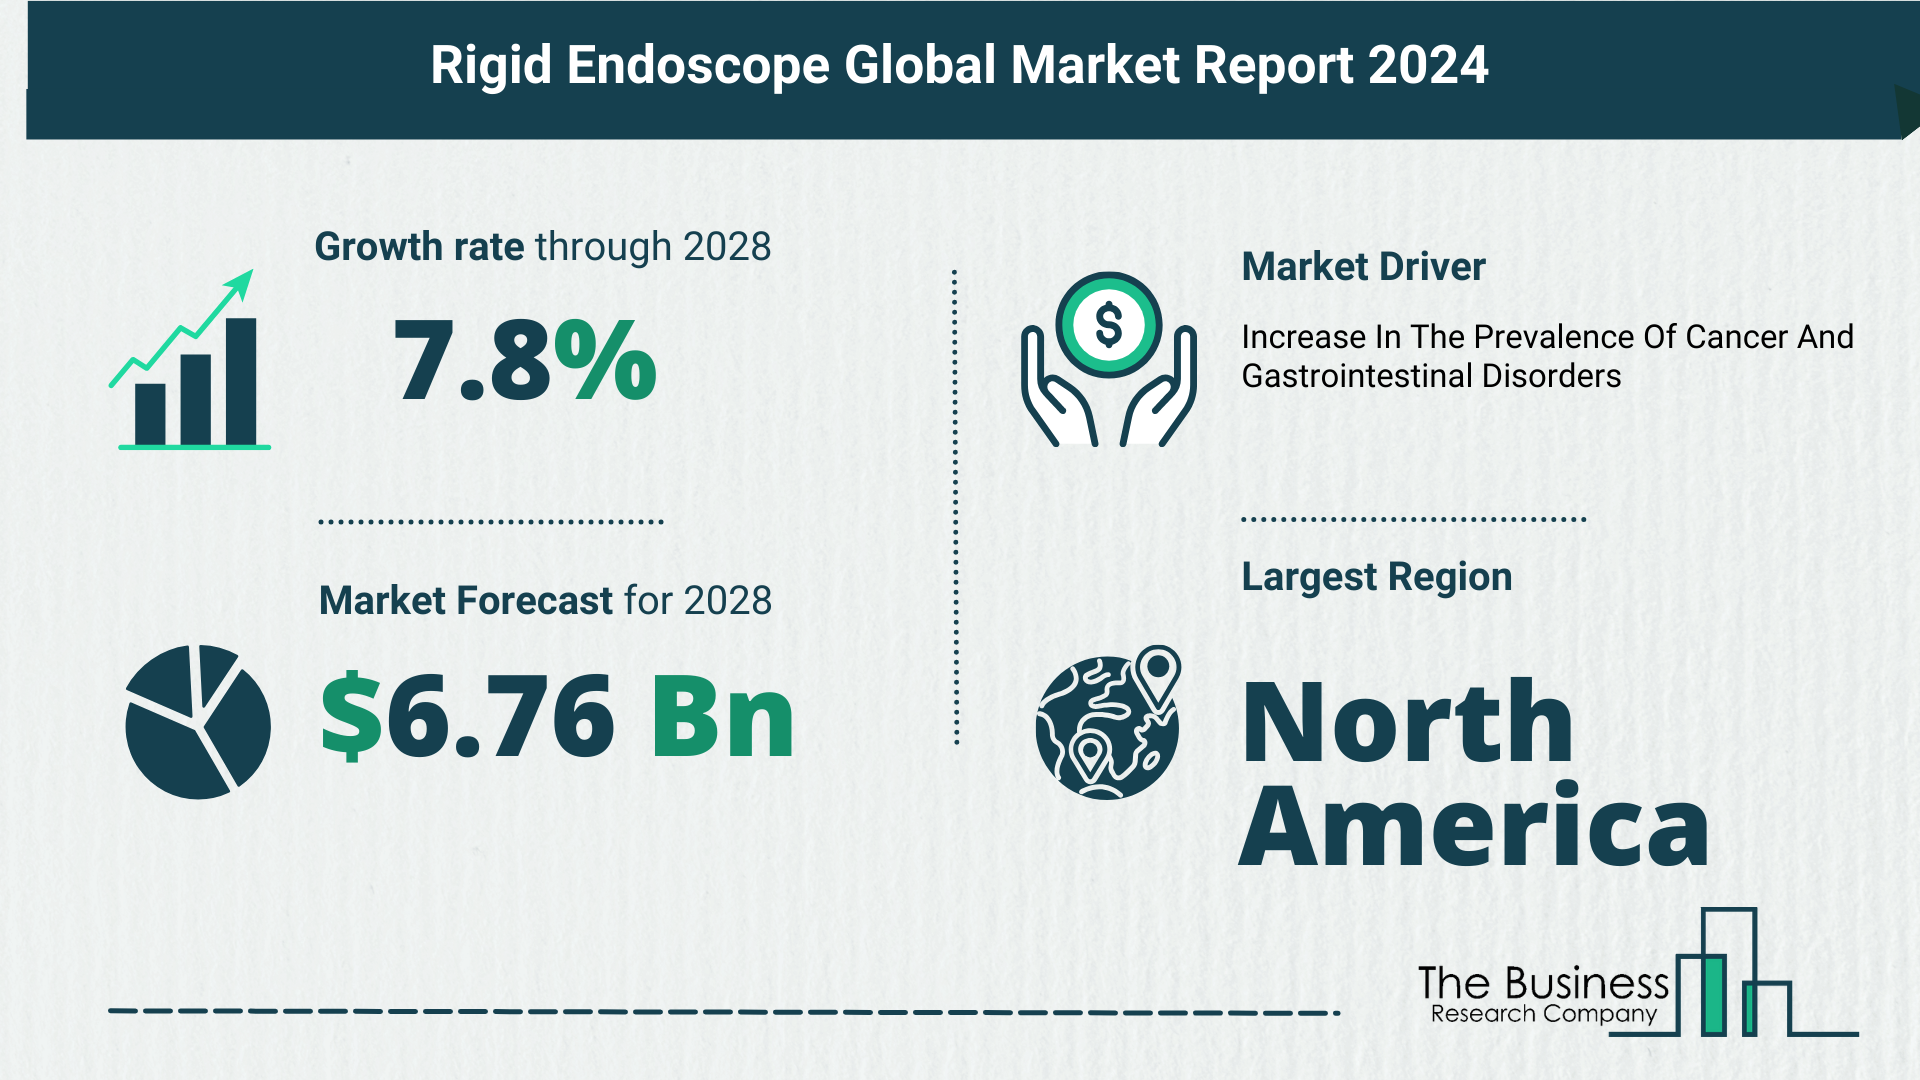 5 Key Insights On The Rigid Endoscope Market 2024